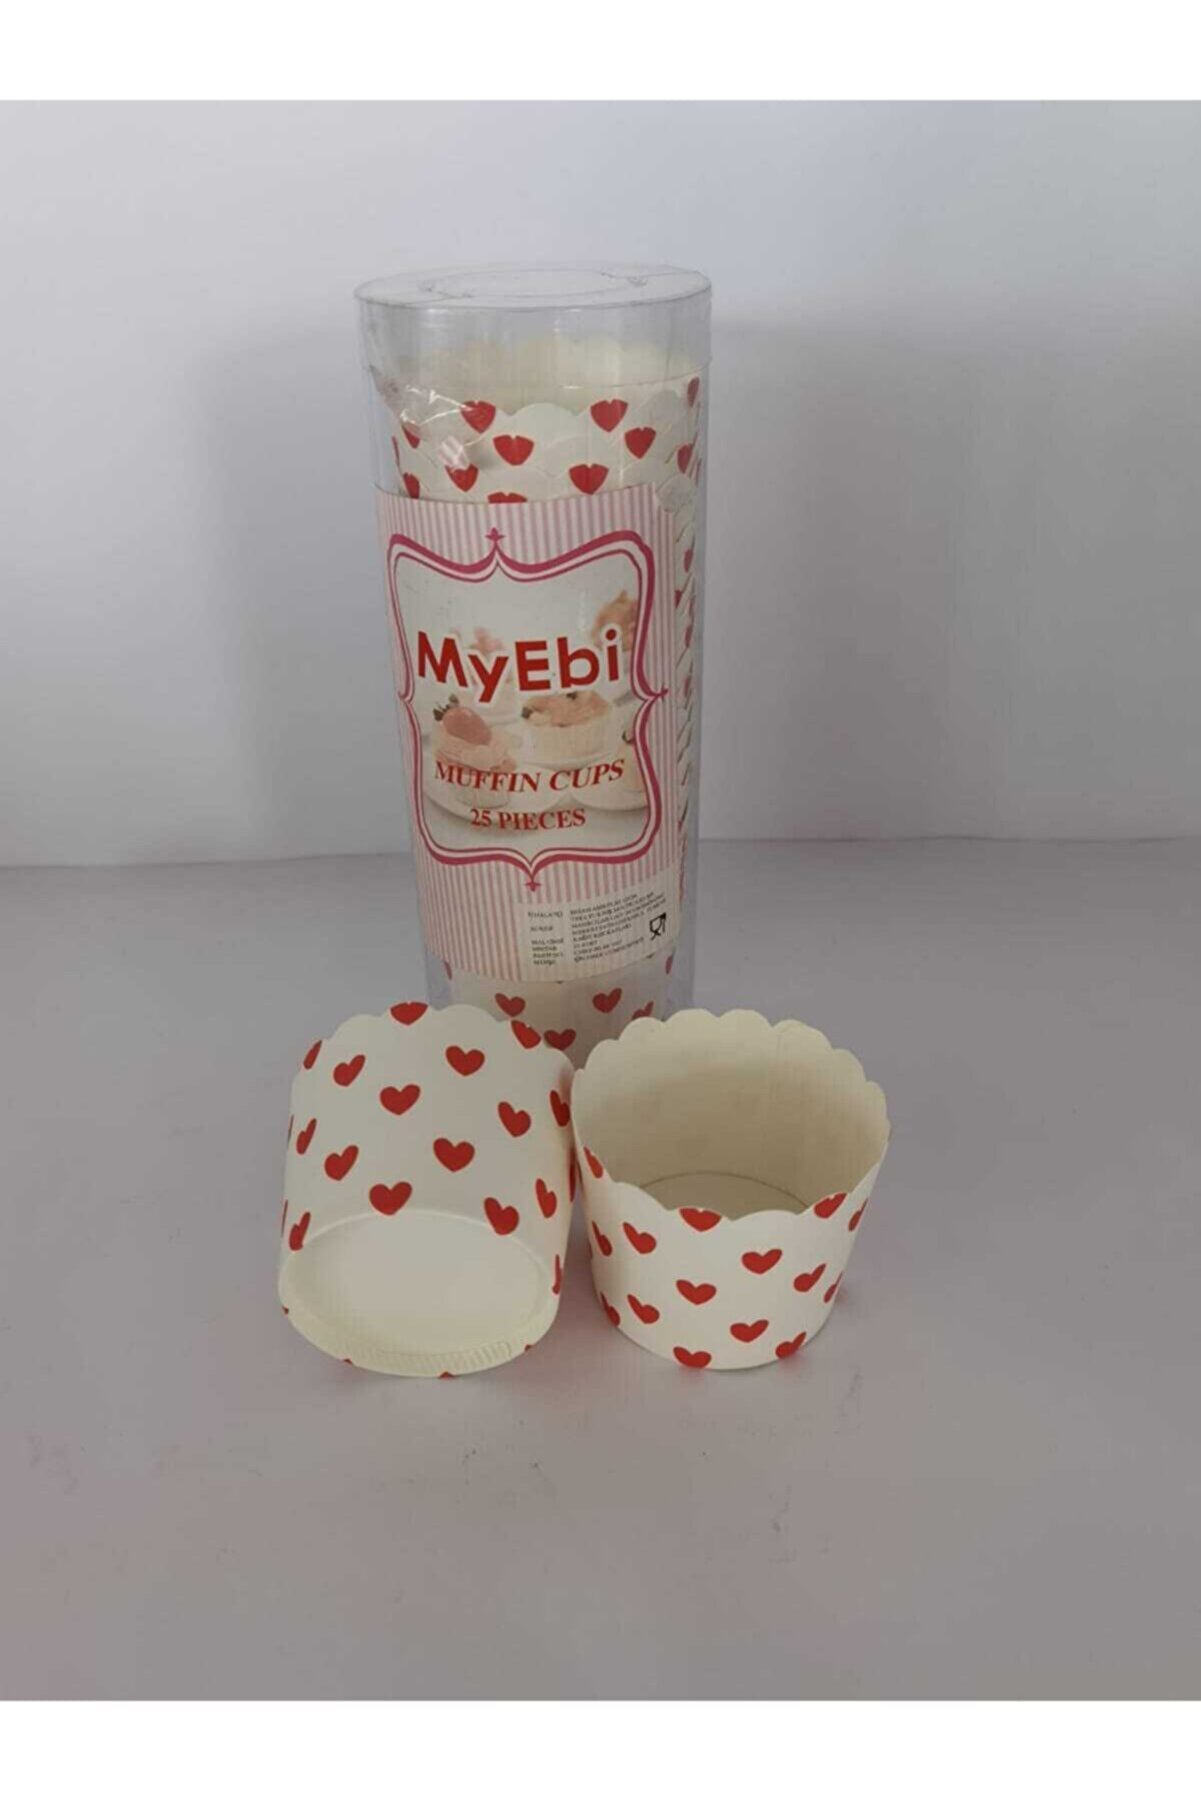 MYEBI Cake Muffin Cups 25 Adet